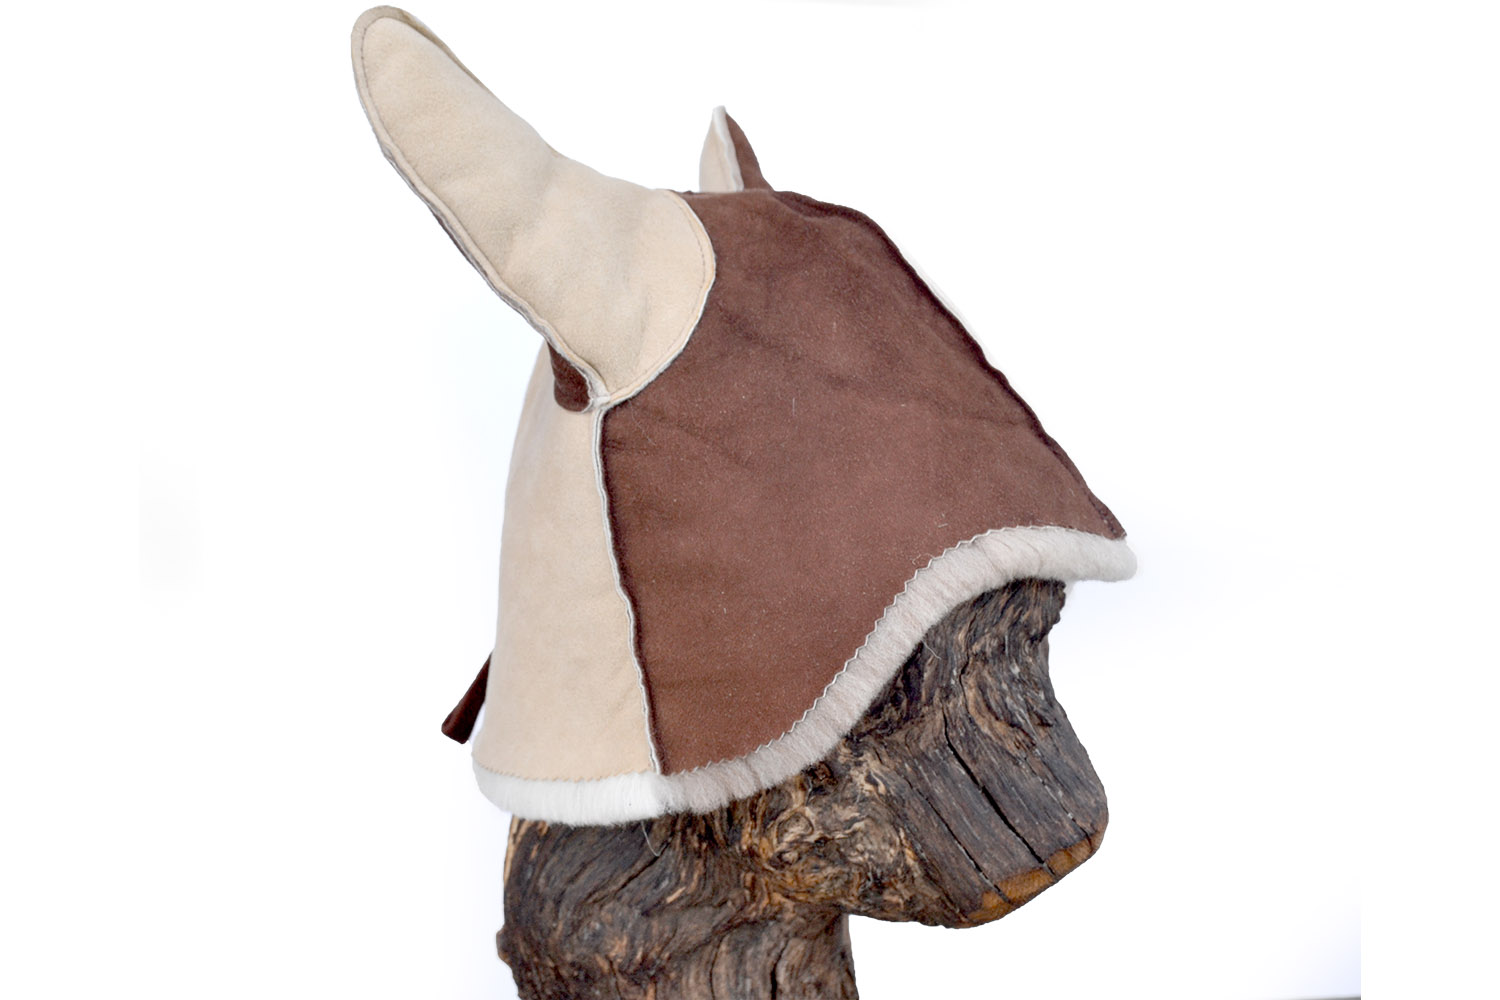 Меховая шапка Викинг для бани из овчины от useGear